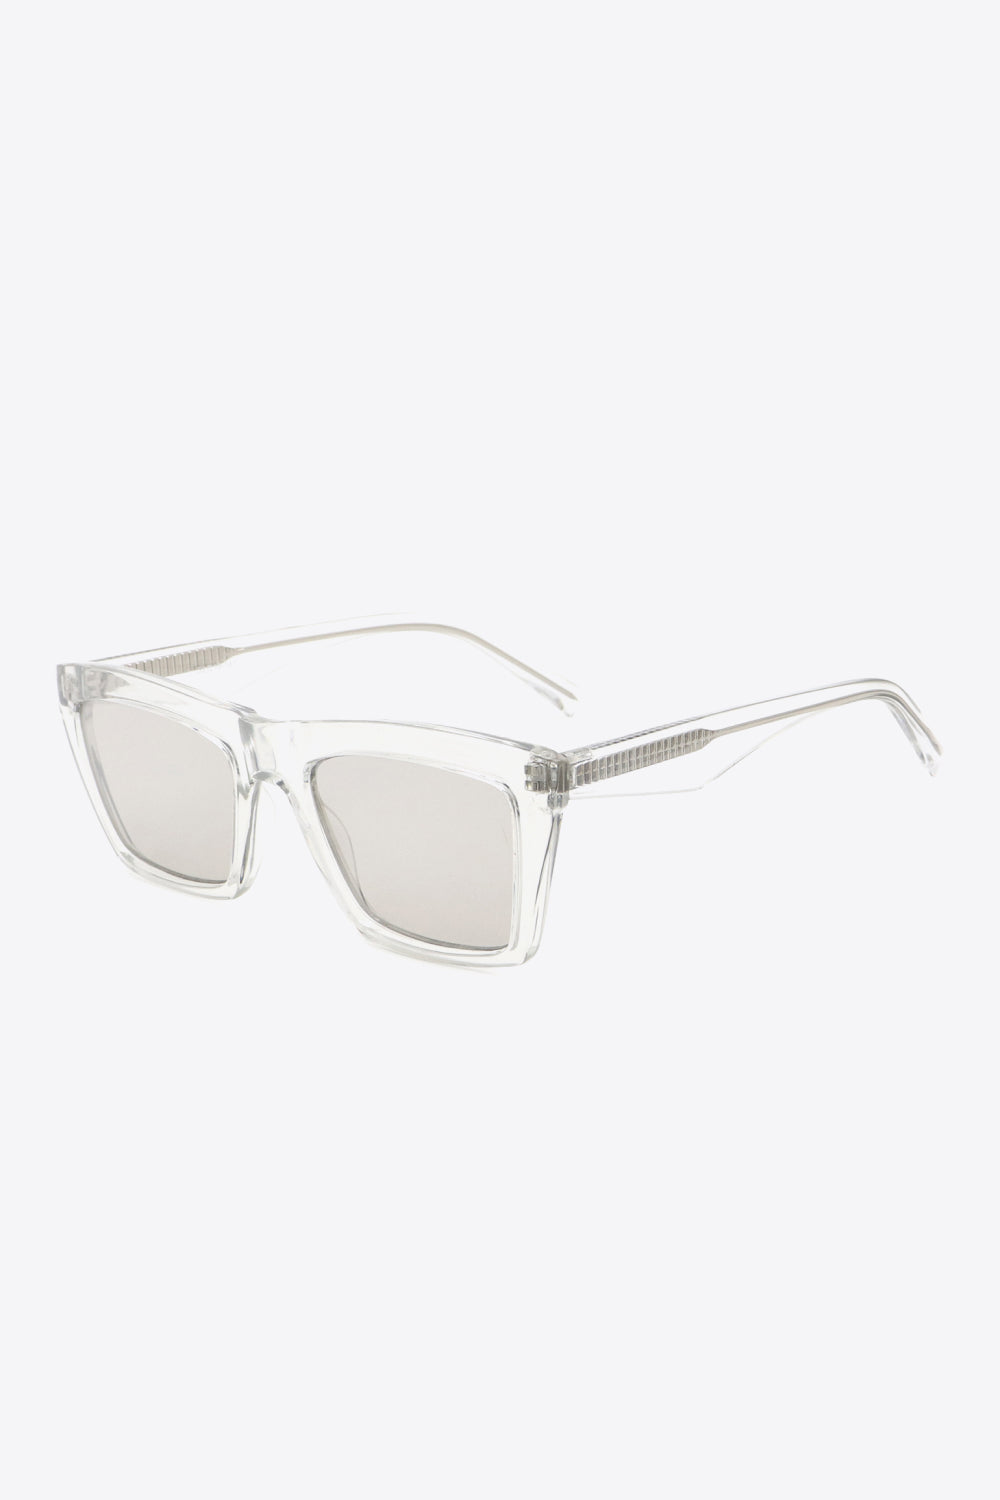 Cellulose Propionate Frame Rectangle Sunglasses - BEAUTY COSMOTICS SHOP